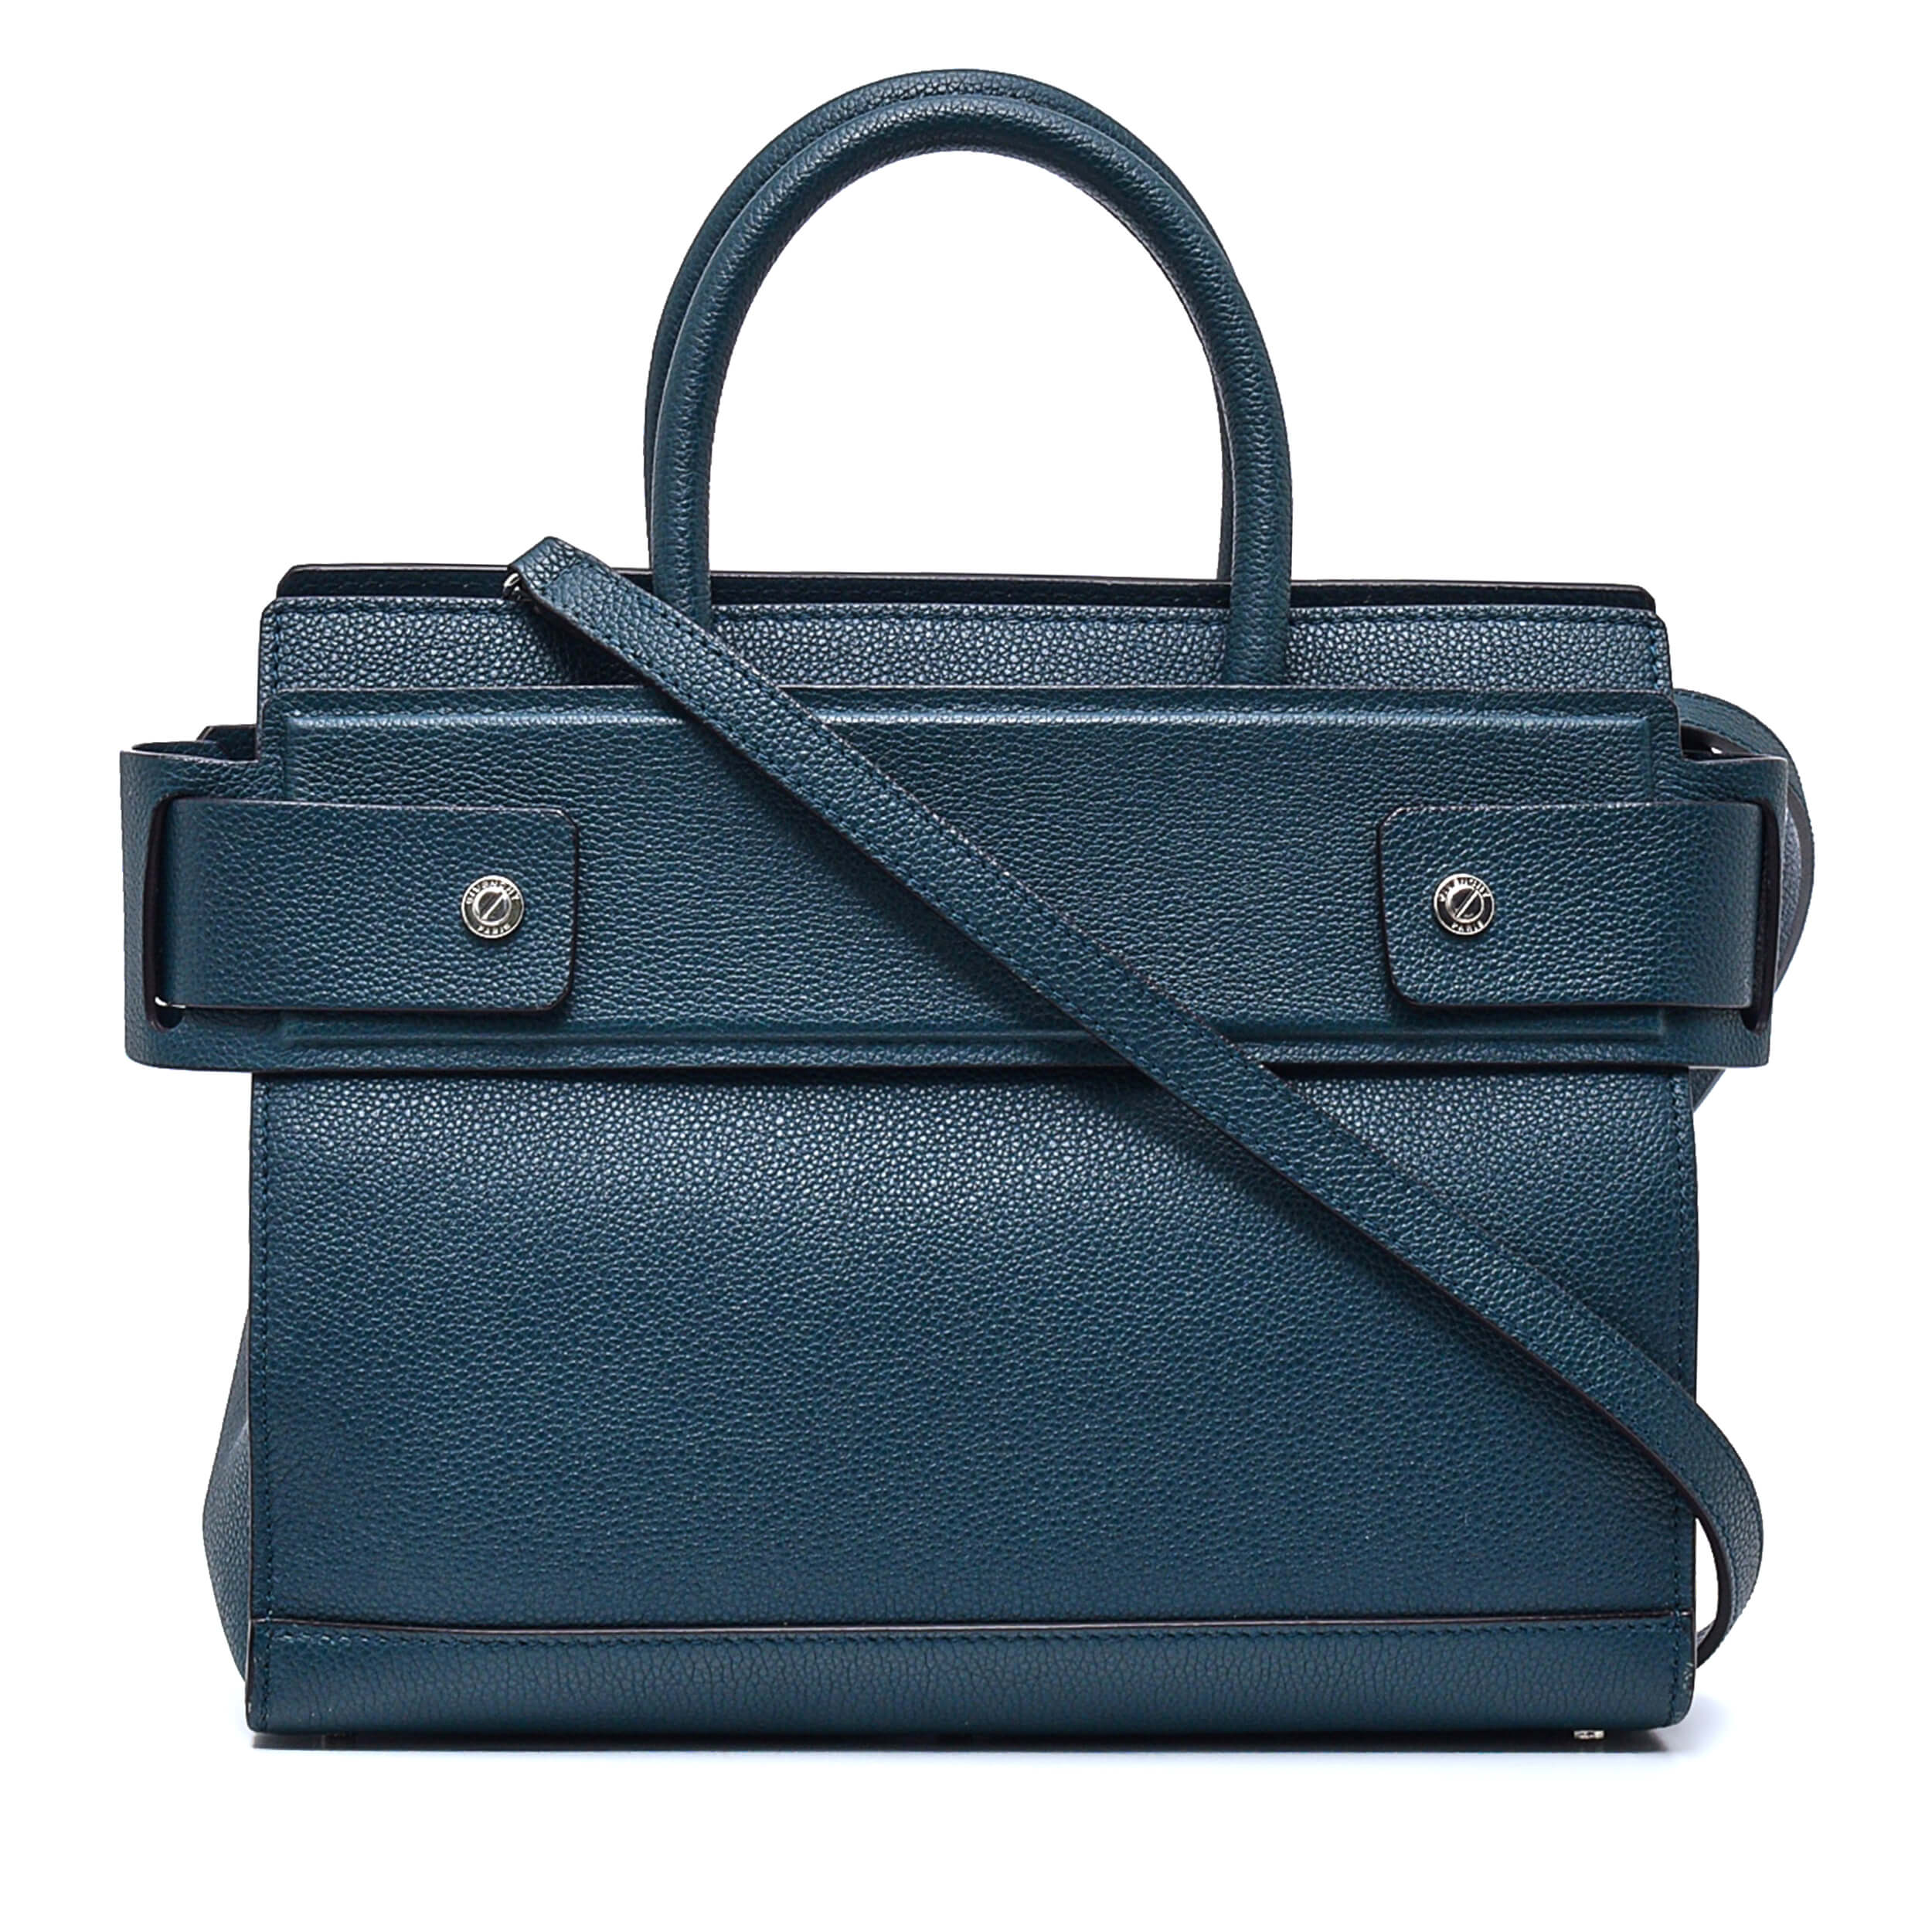 Givenchy - Blue Calfskin Leather Small Horizon Bag